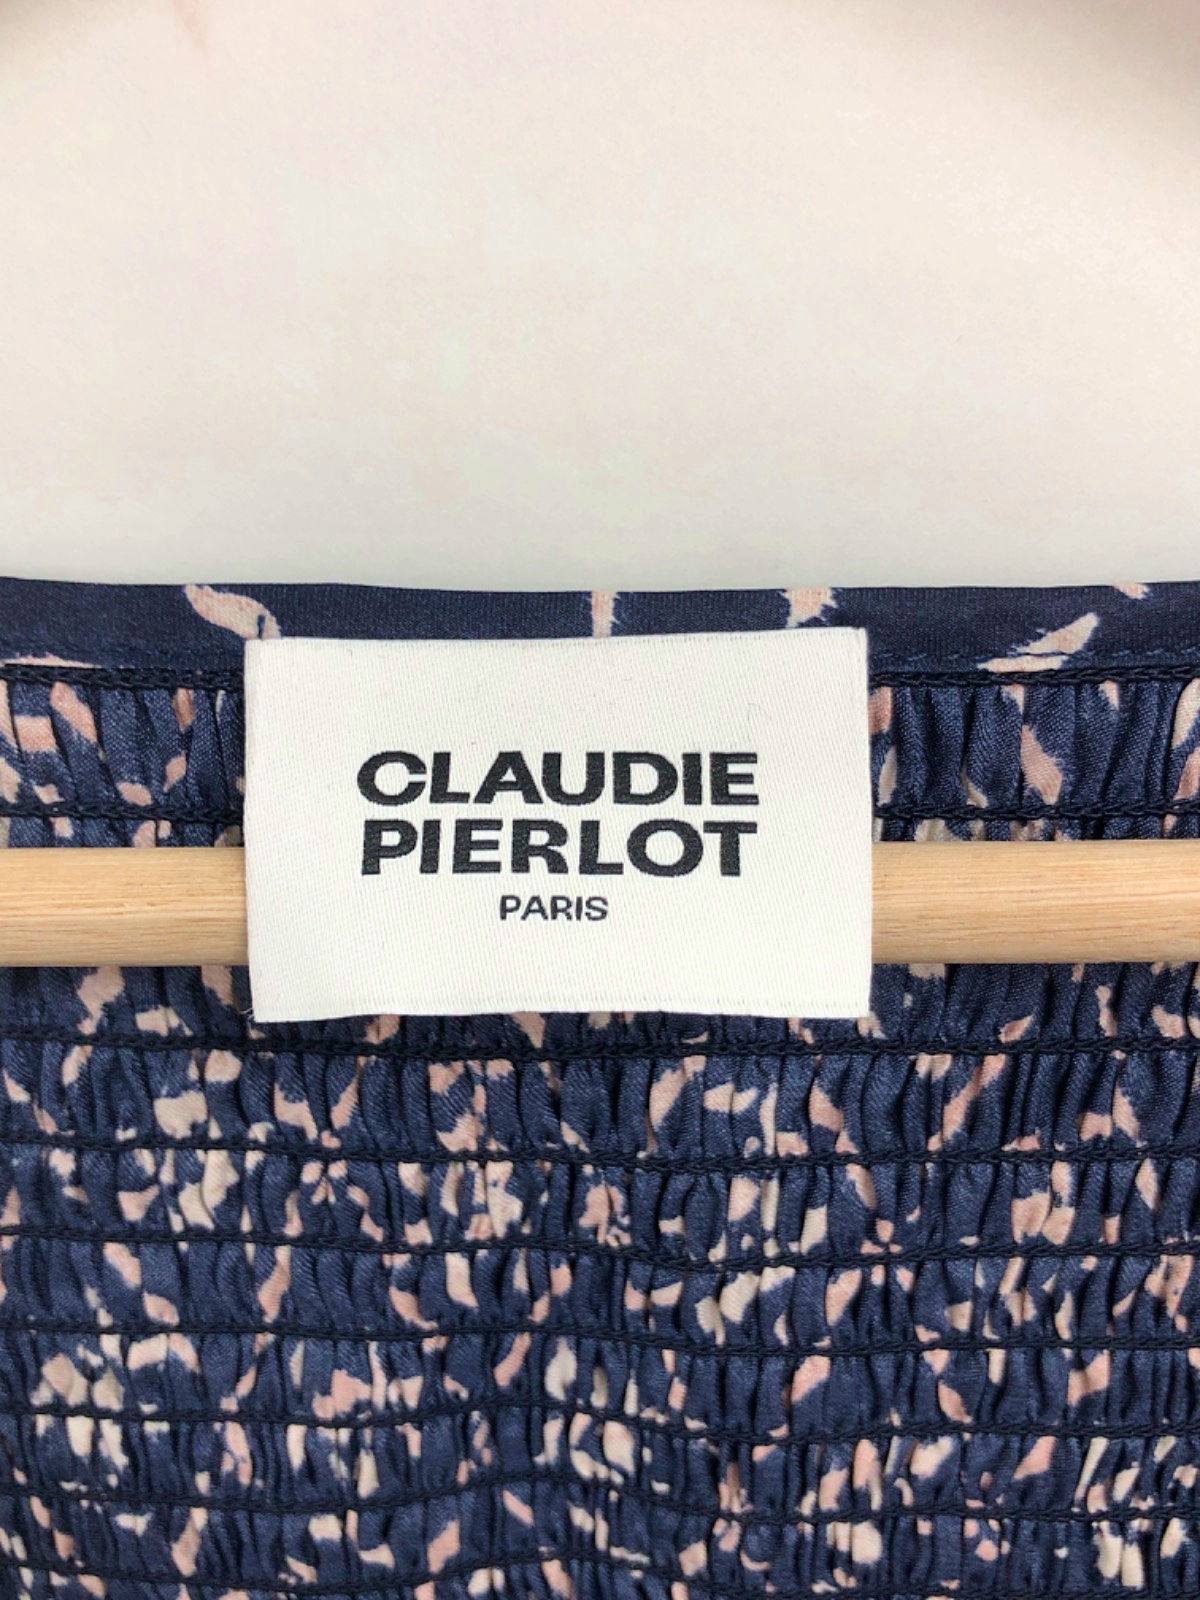 Claudie Pierlot Print Fonce Long Sleeve Blouse UK 12